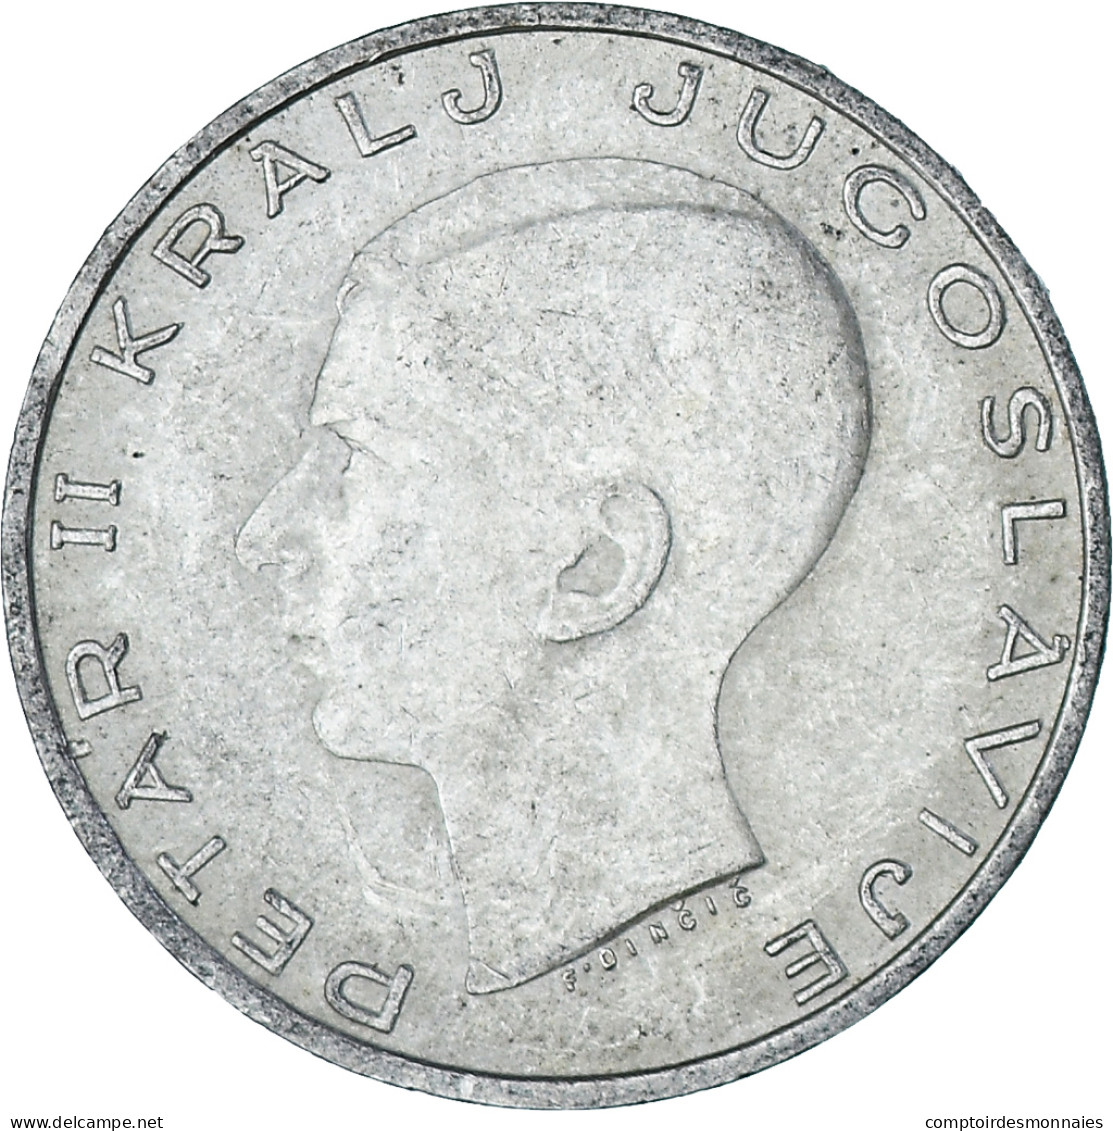 Monnaie, Yougoslavie, Petar II, 20 Dinara, 1938, TTB, Argent, KM:23 - Jugoslavia